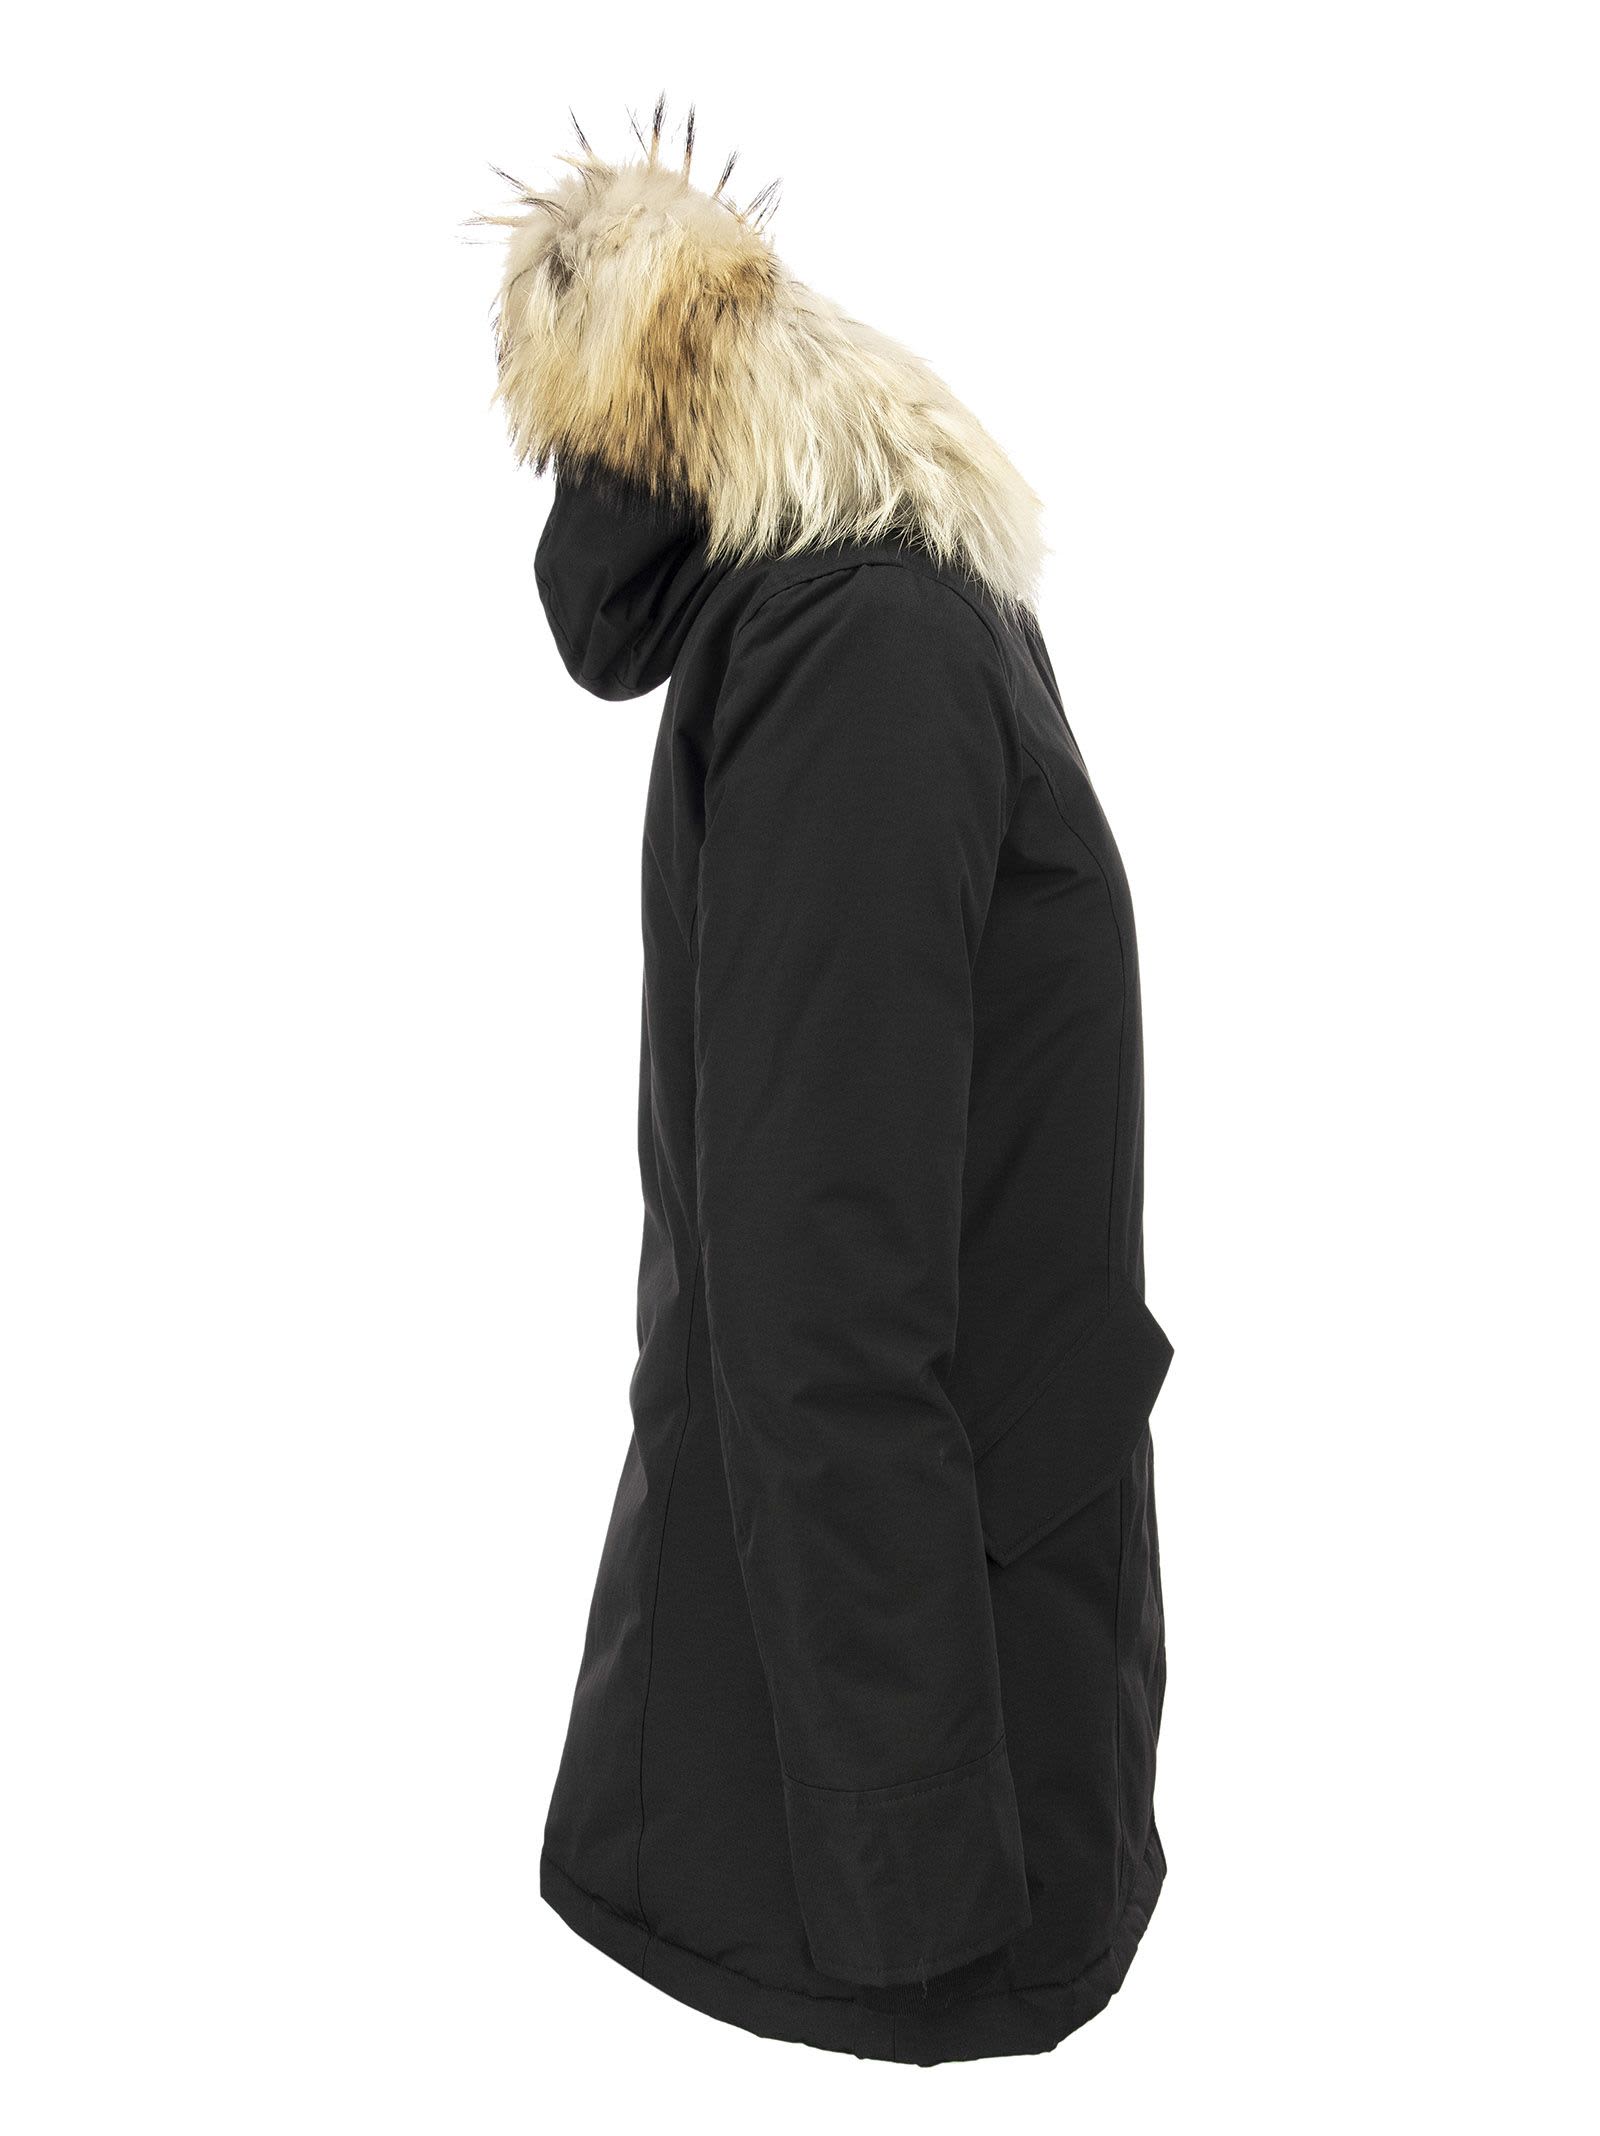 Shop Woolrich Arctic Parka Fur Racoon In Blk Black